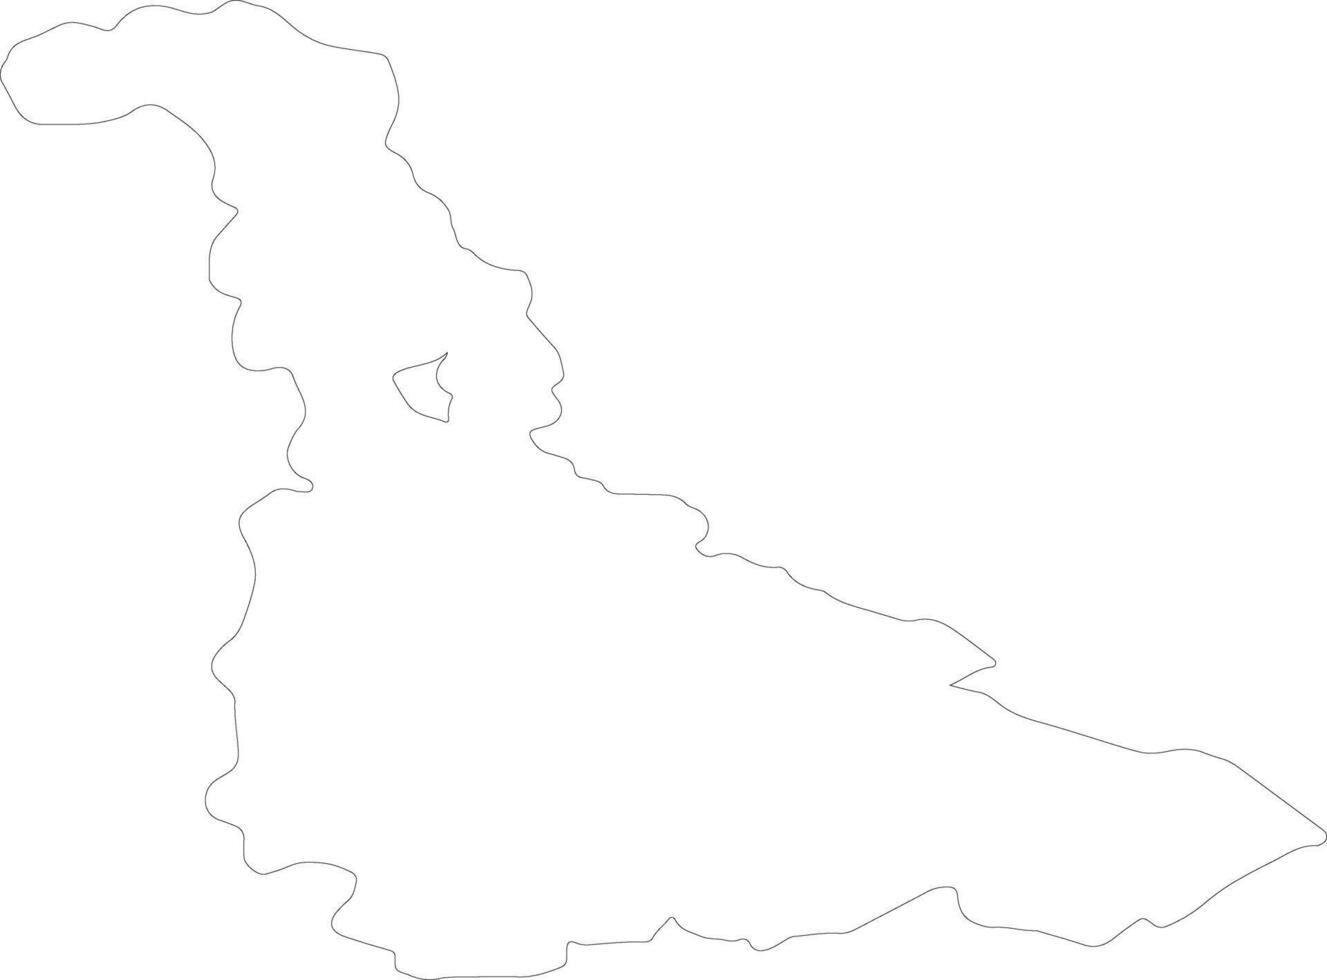 Meurthe-et-Moselle France outline map vector